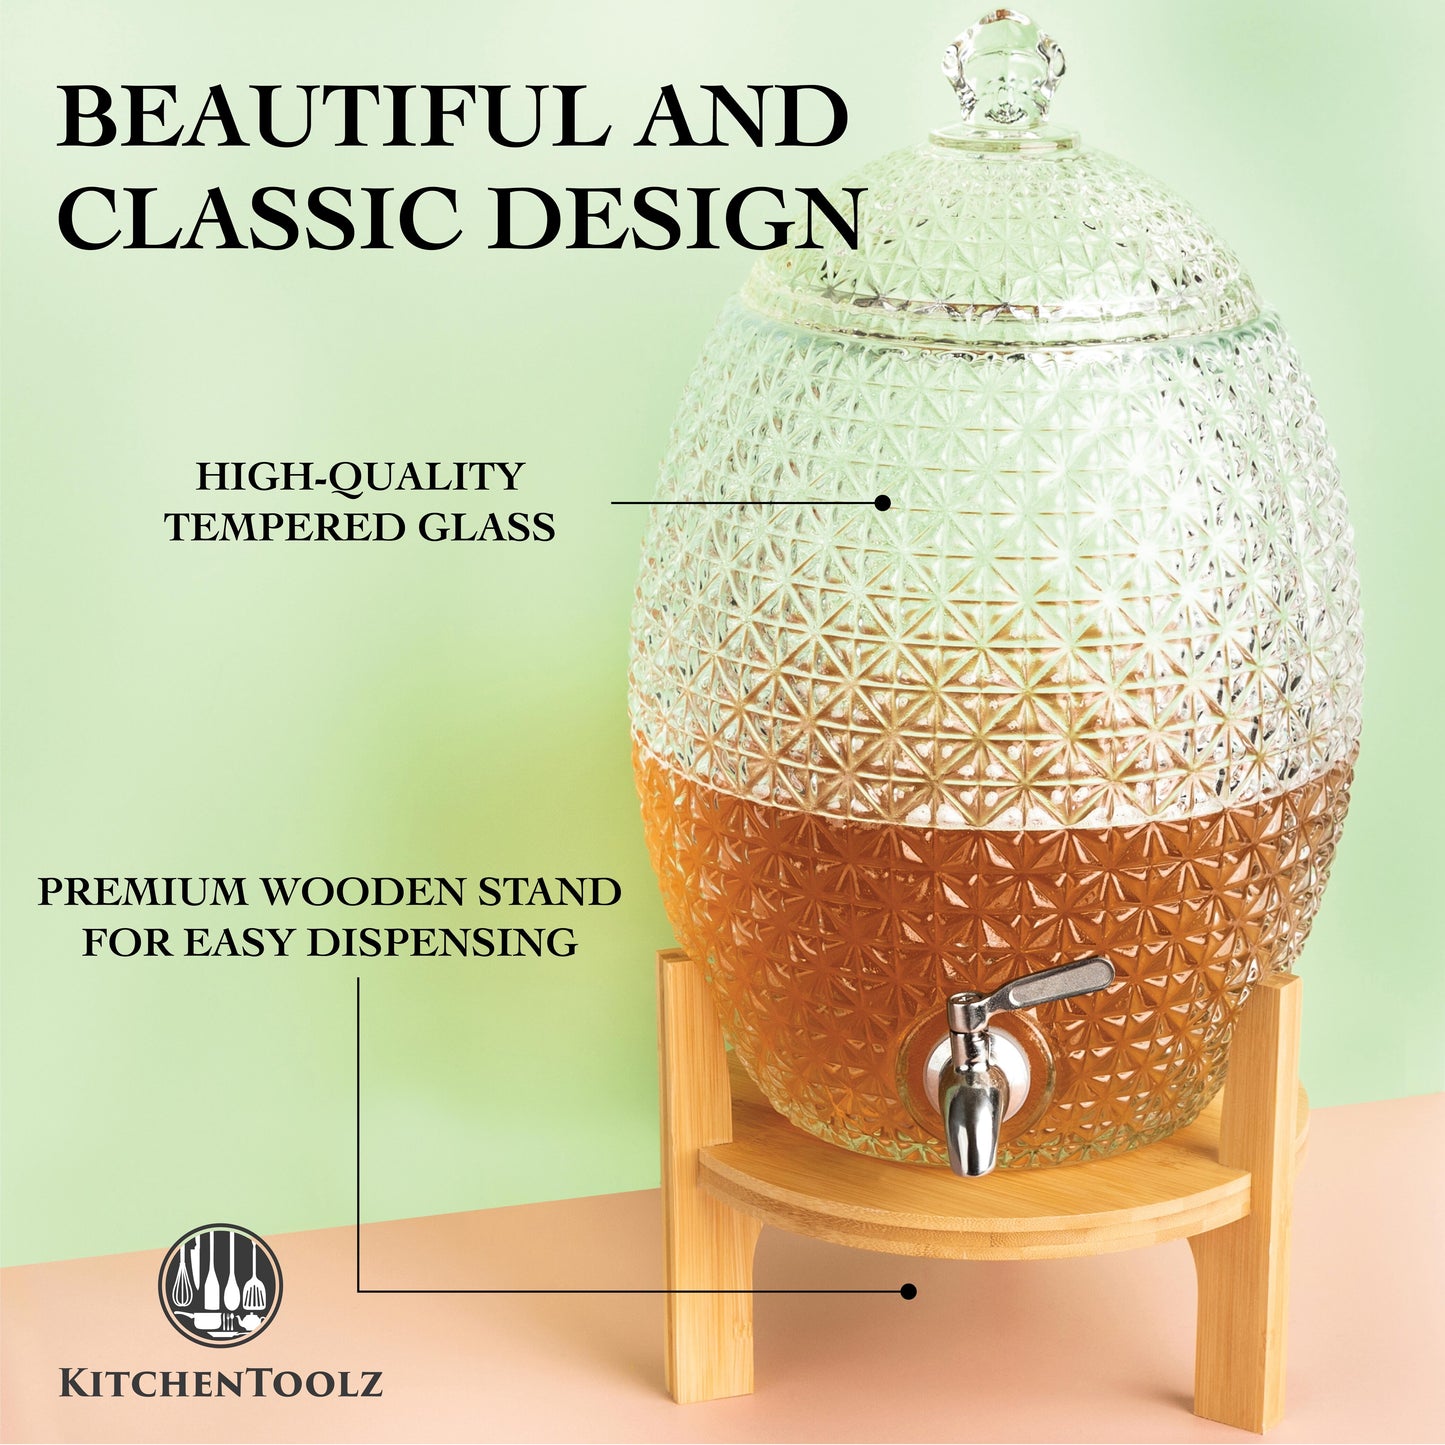 2.5 Gallon Glass Dispenser Bamboo Stand- Faberge Egg